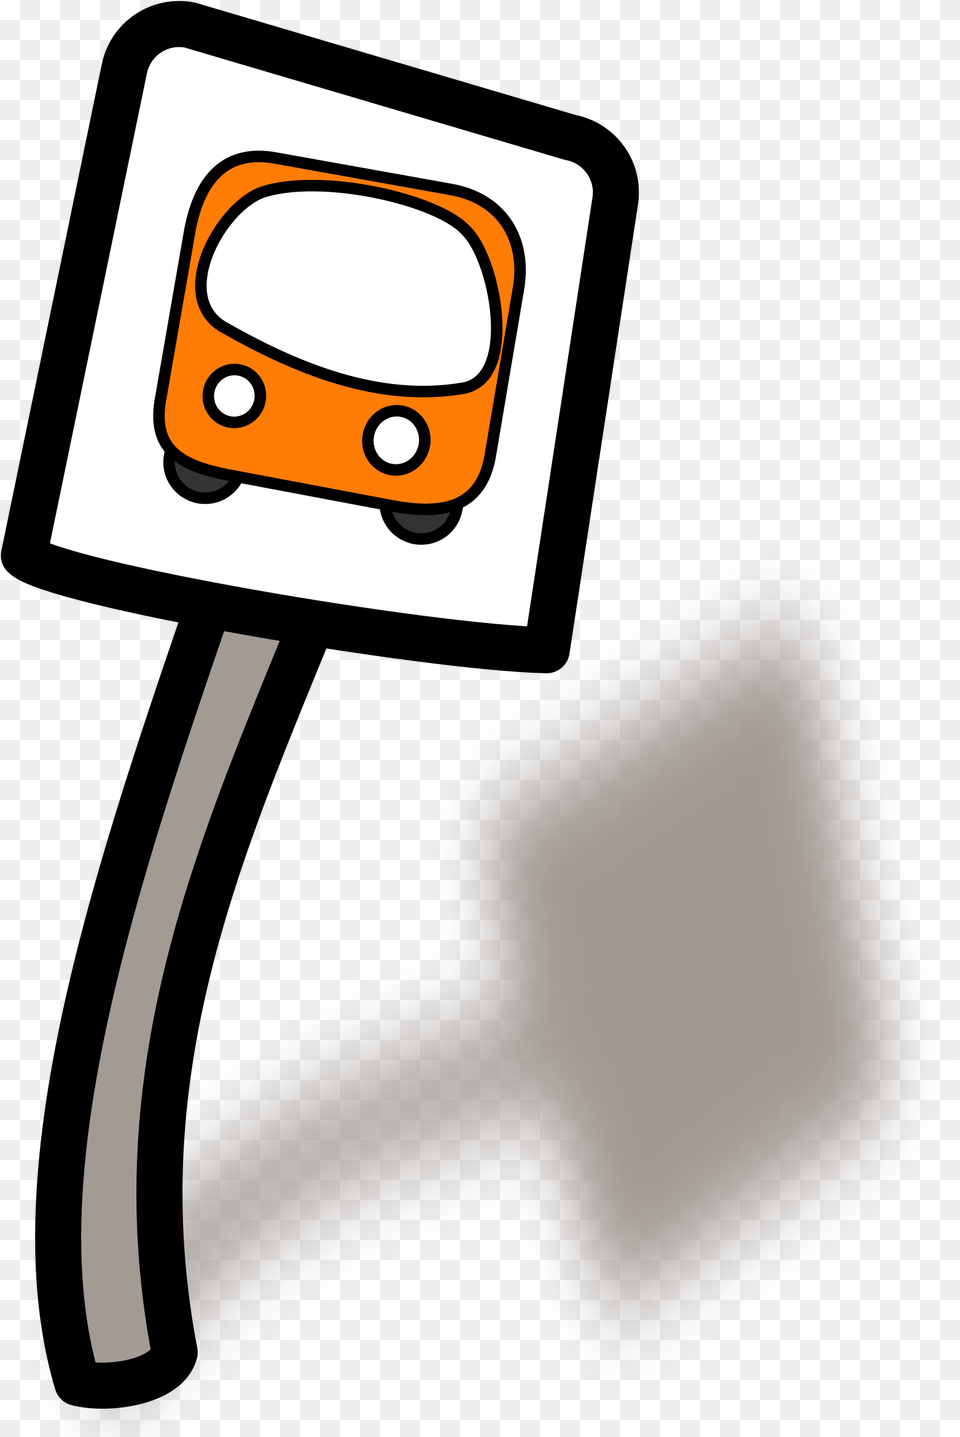 Bus Stop Sign Clipart Bus Stop, Adapter, Electronics, Plug Free Transparent Png